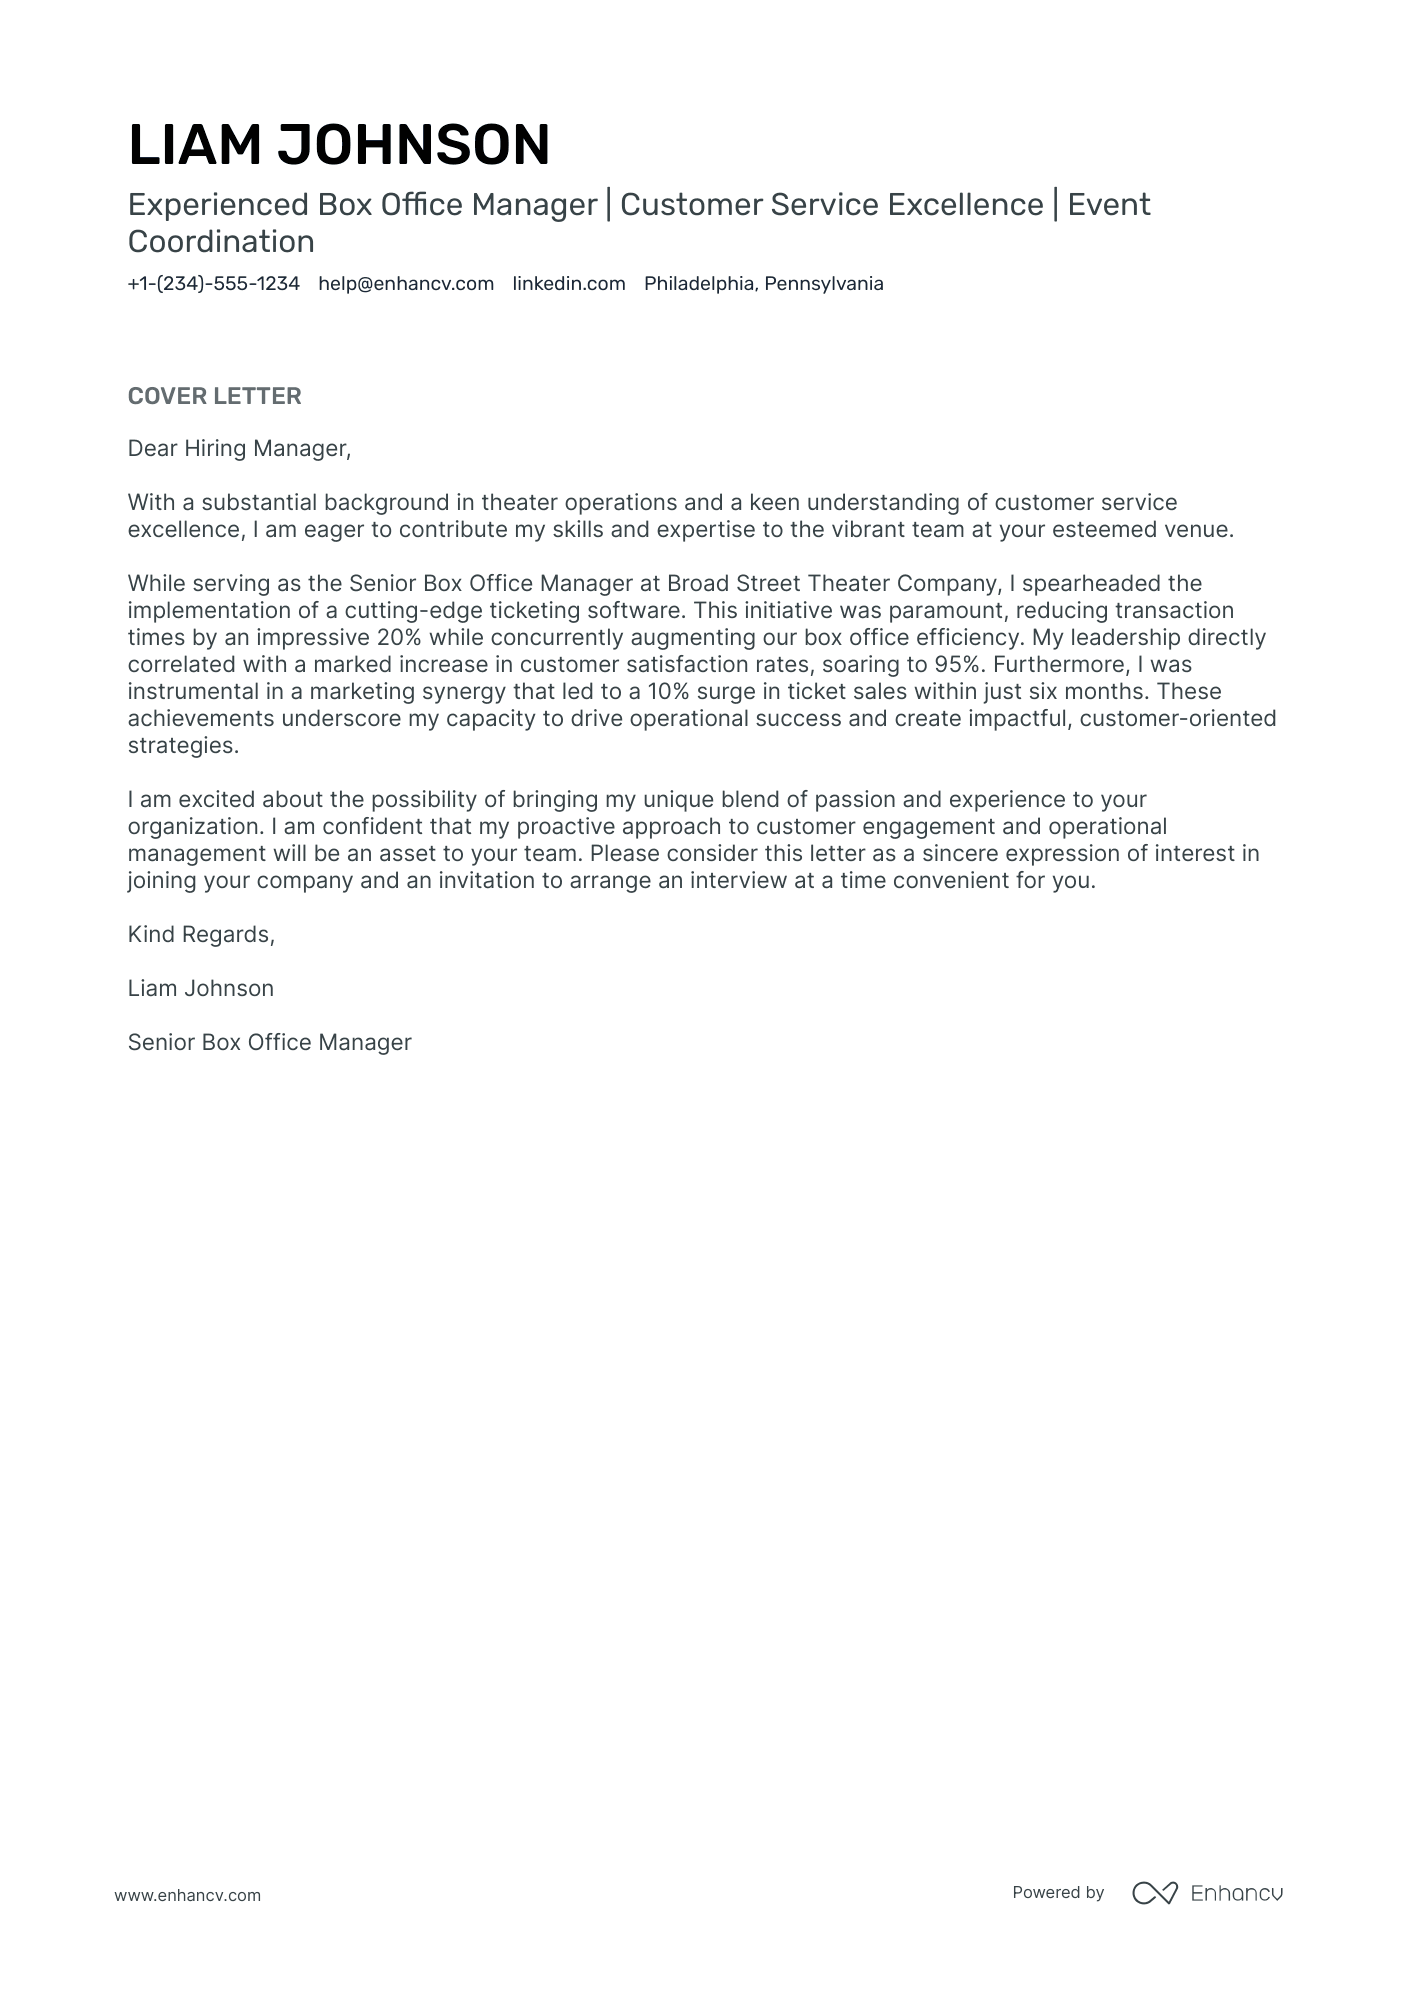 cover letter for a restaurant general manager position